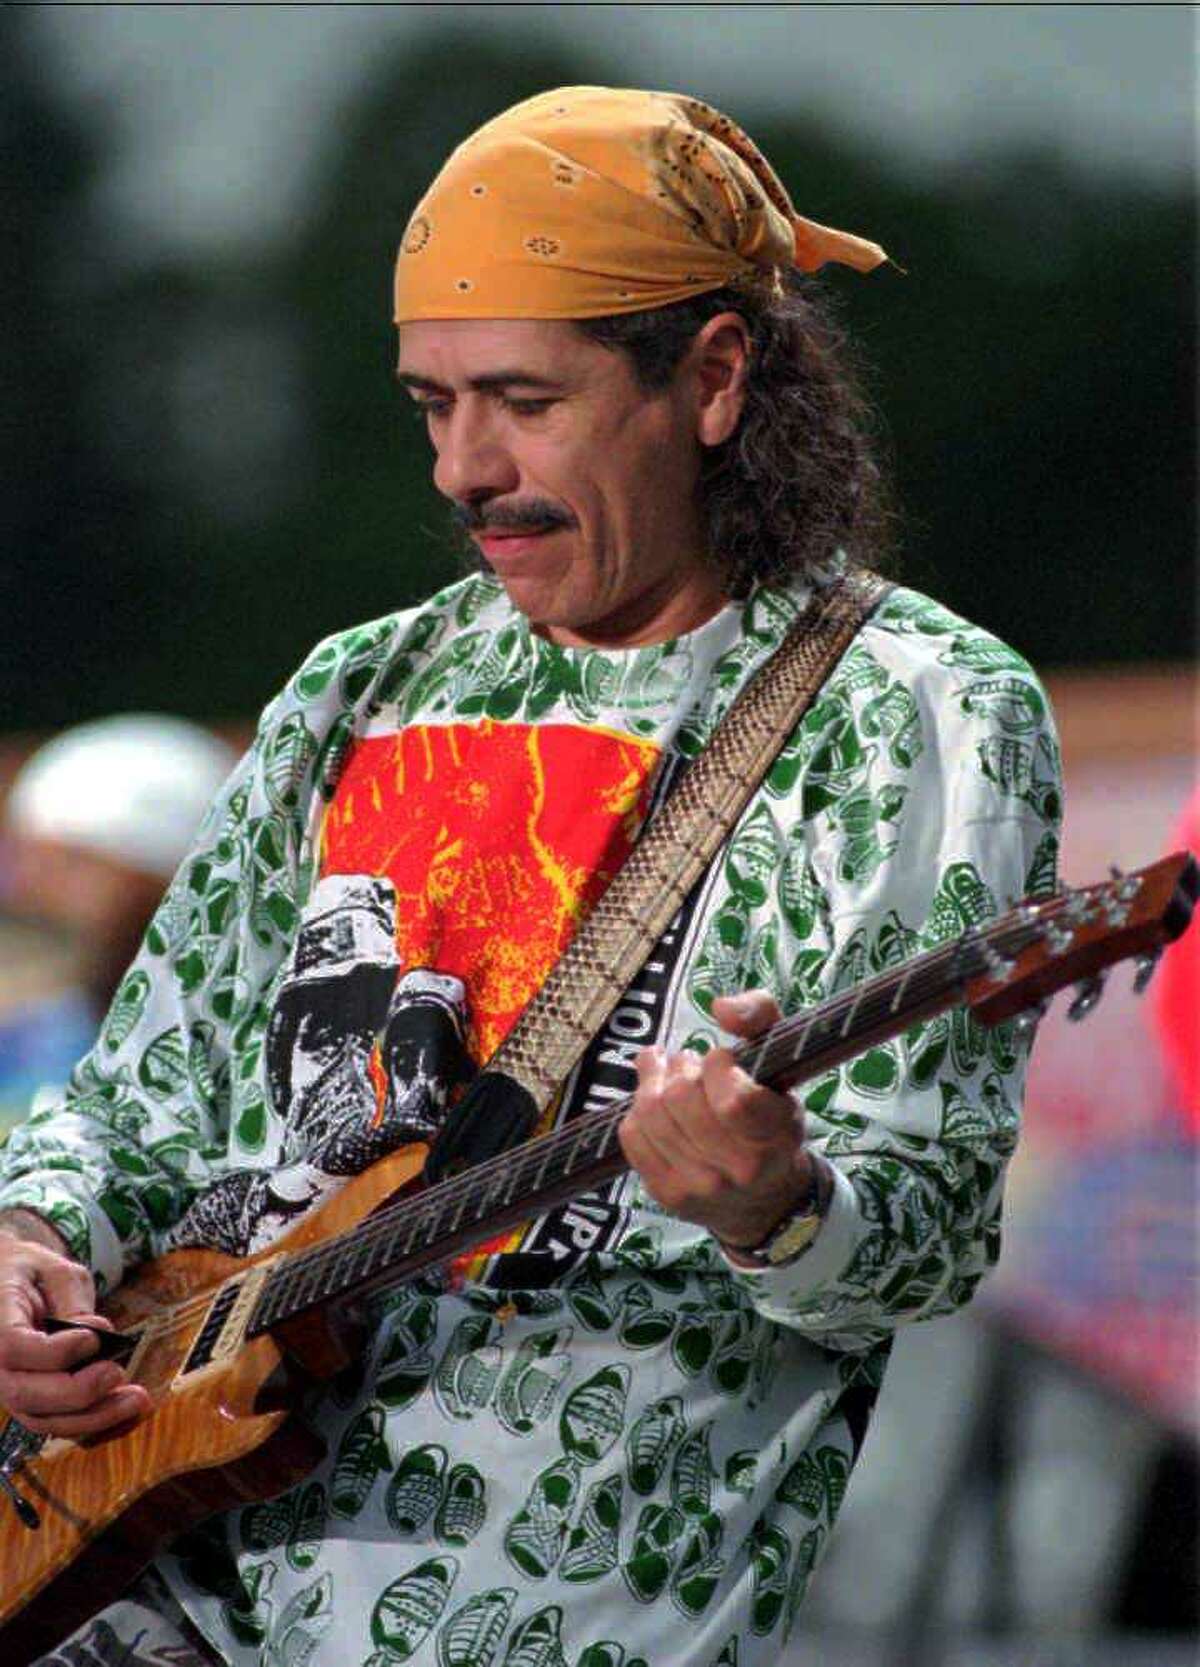 Looking back at Woodstock '94